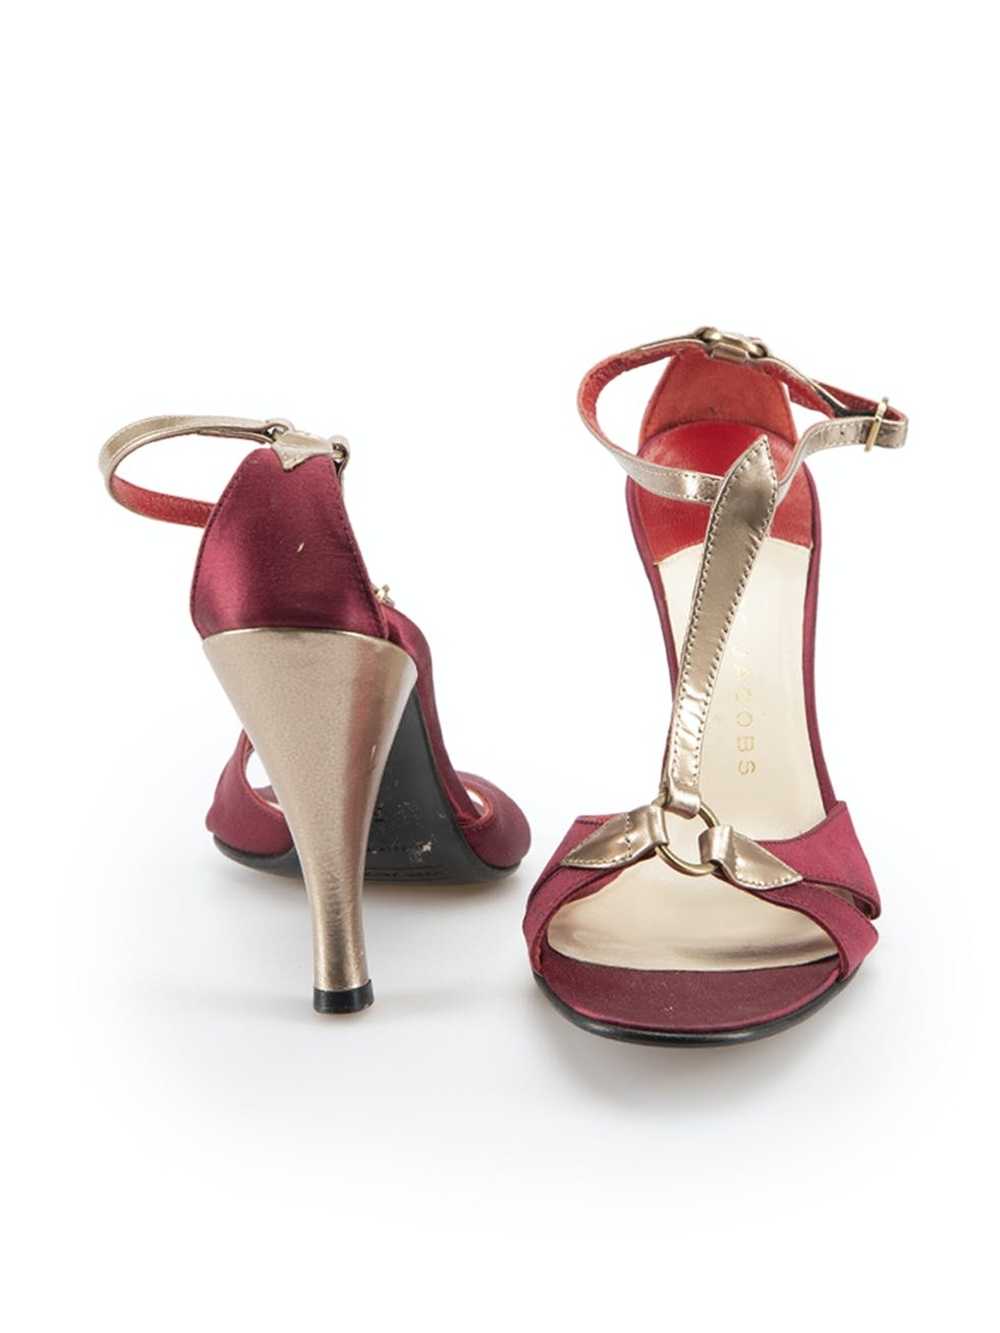 Marc Jacobs Burgundy Satin T-Strap Sandals - image 3